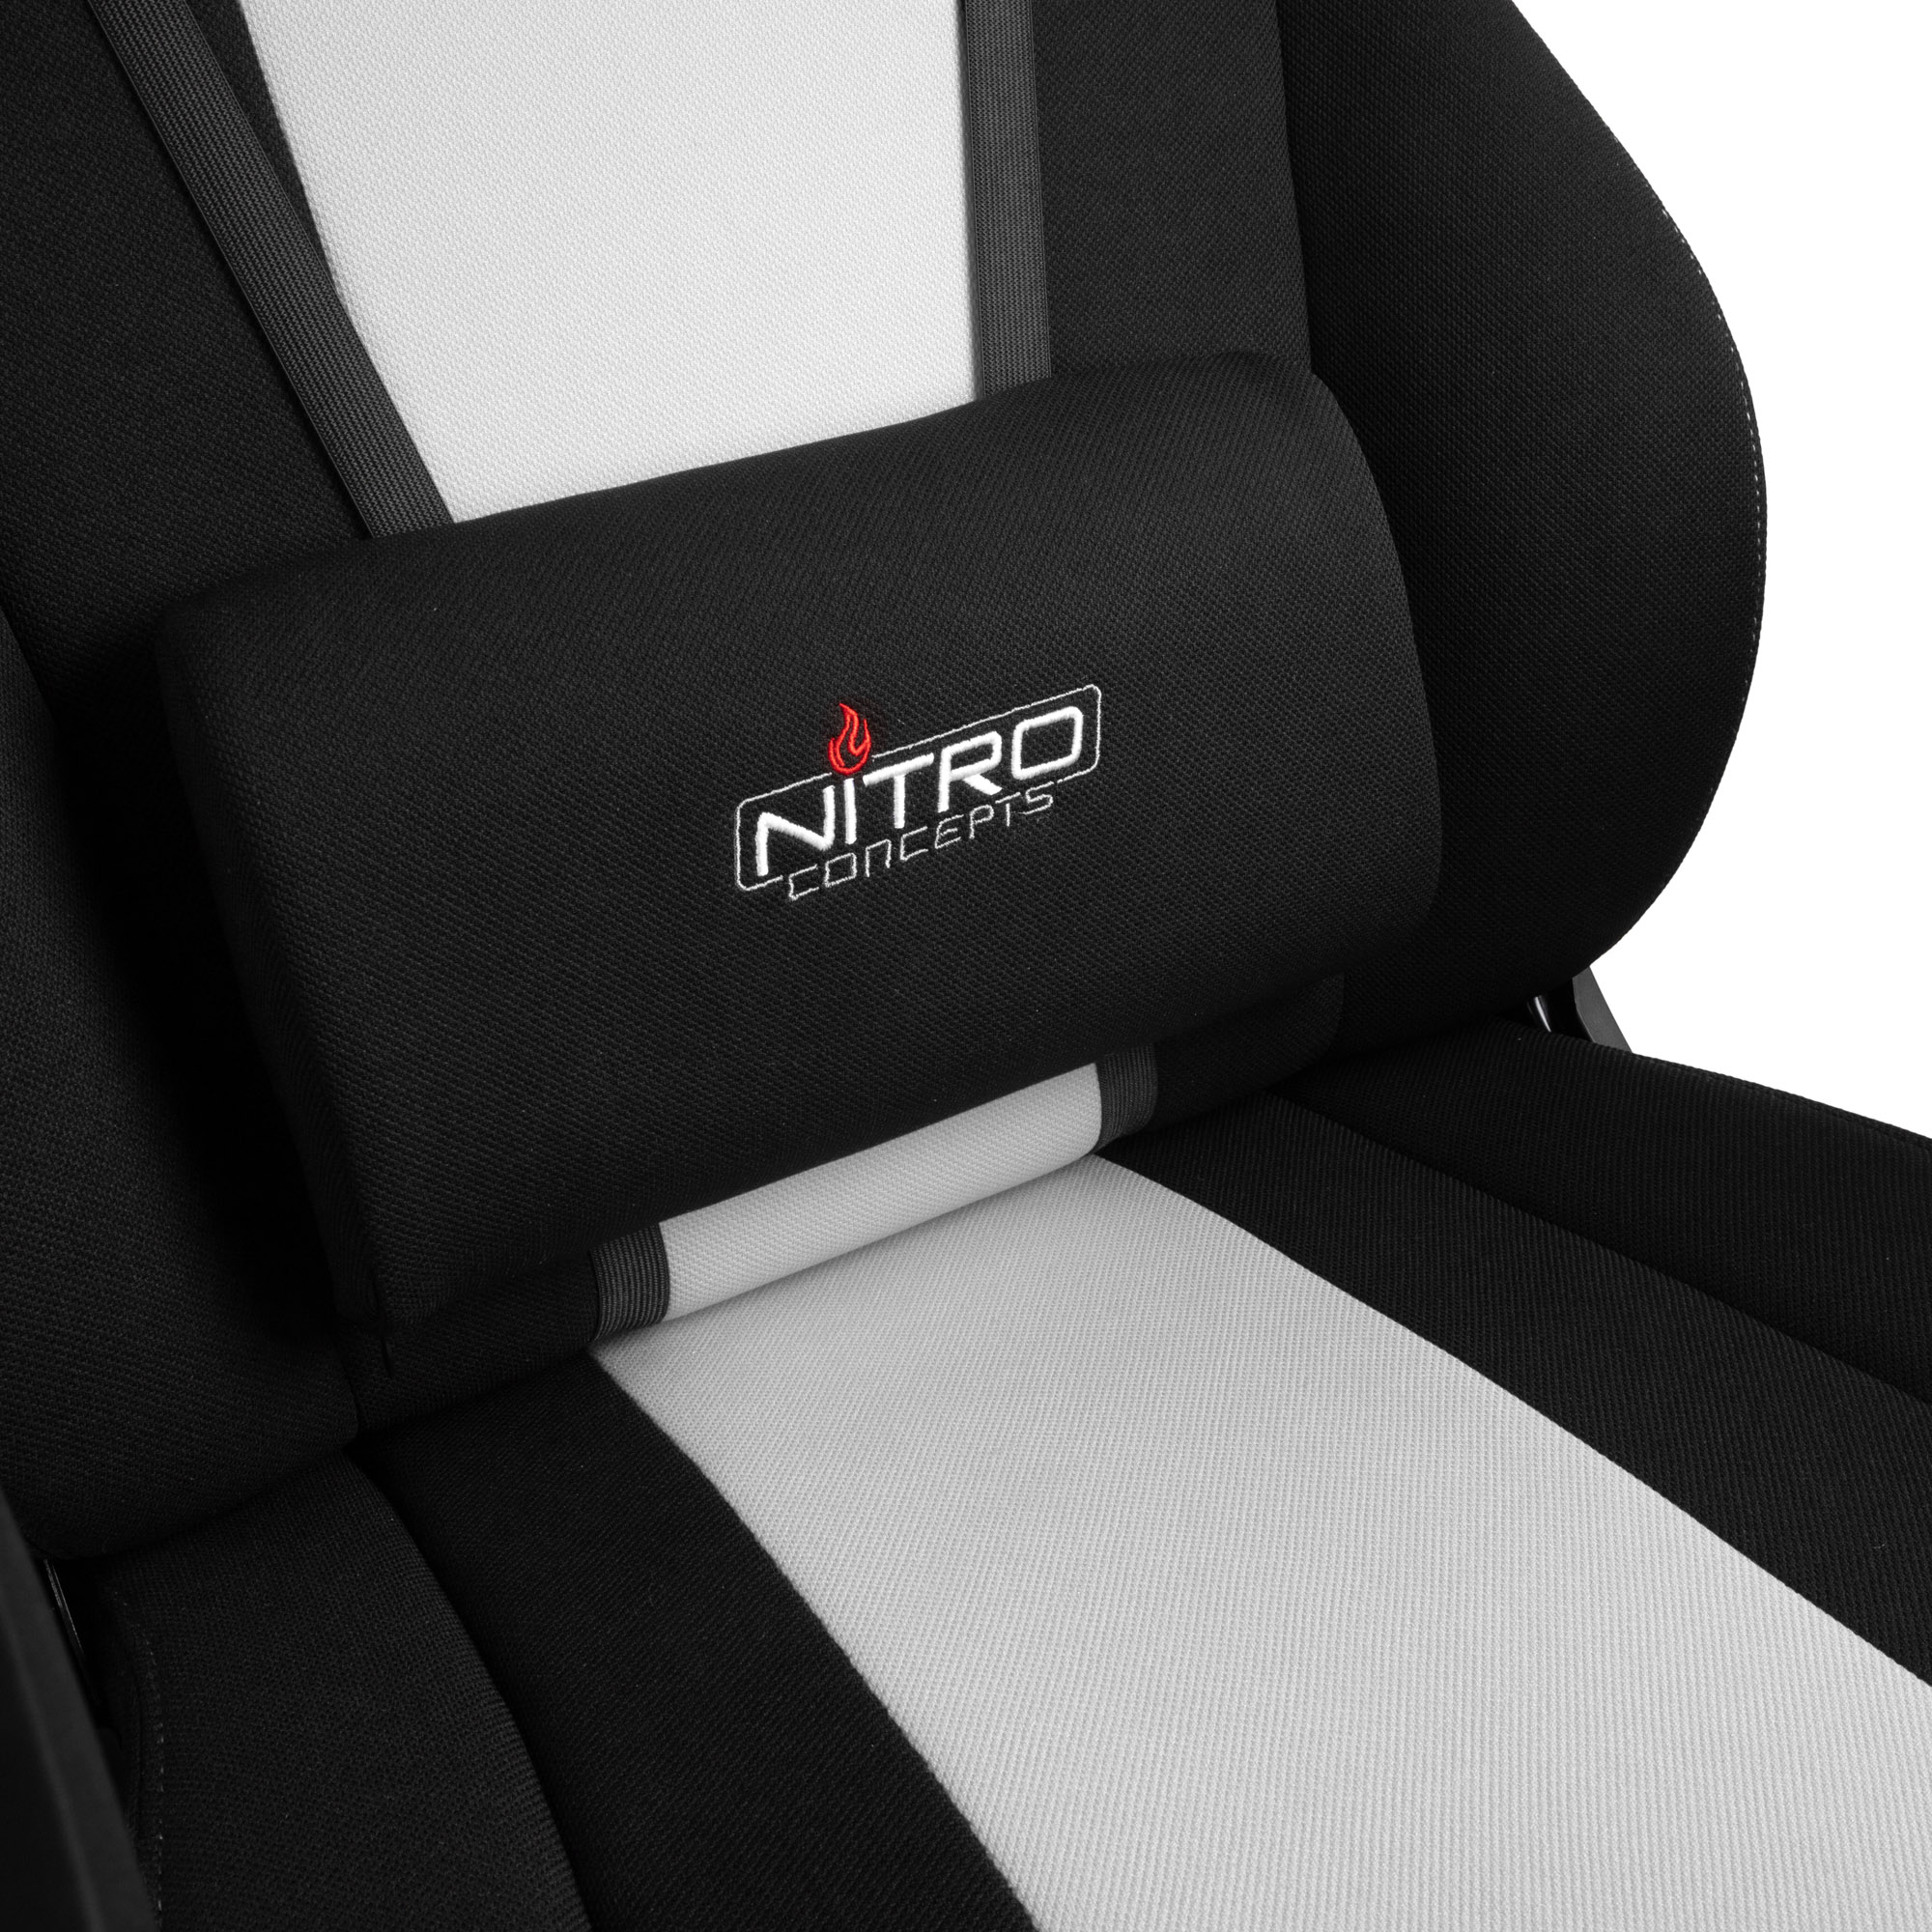 nitro-concepts - E250 Gaming Stuhl schwarz/weiß